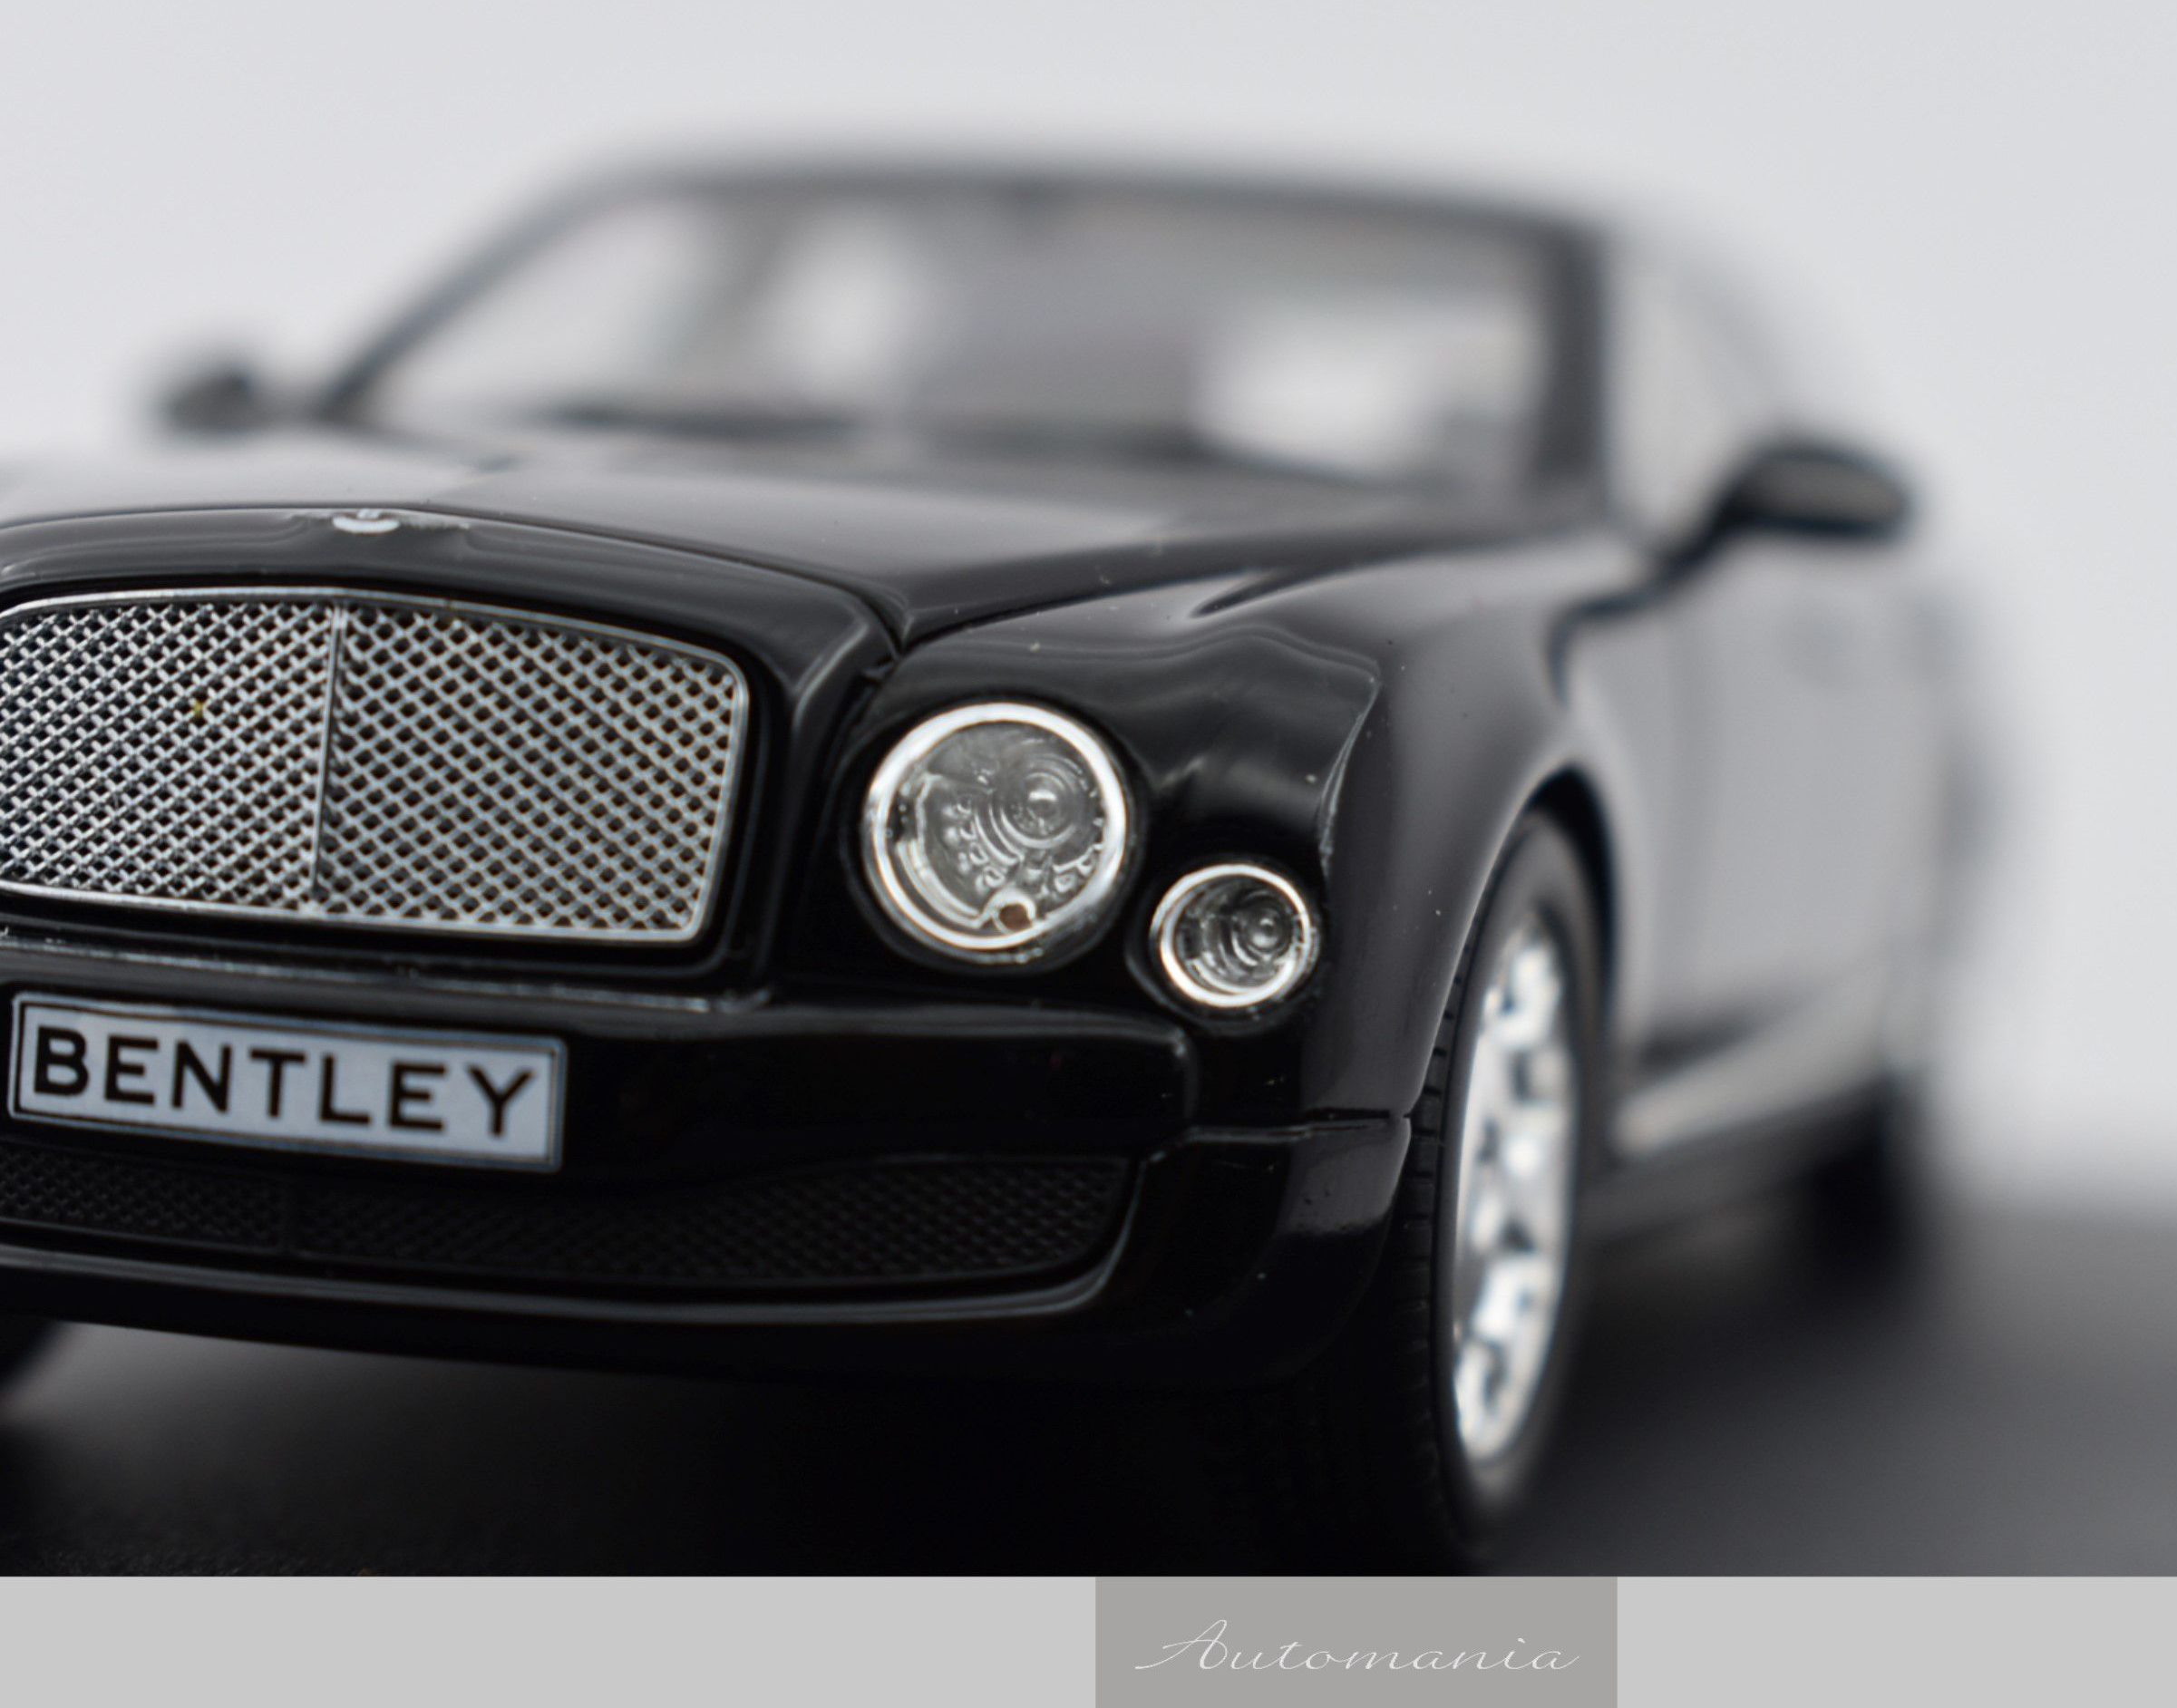 Bentley Mulsanne 2010 (Black) | Automania India